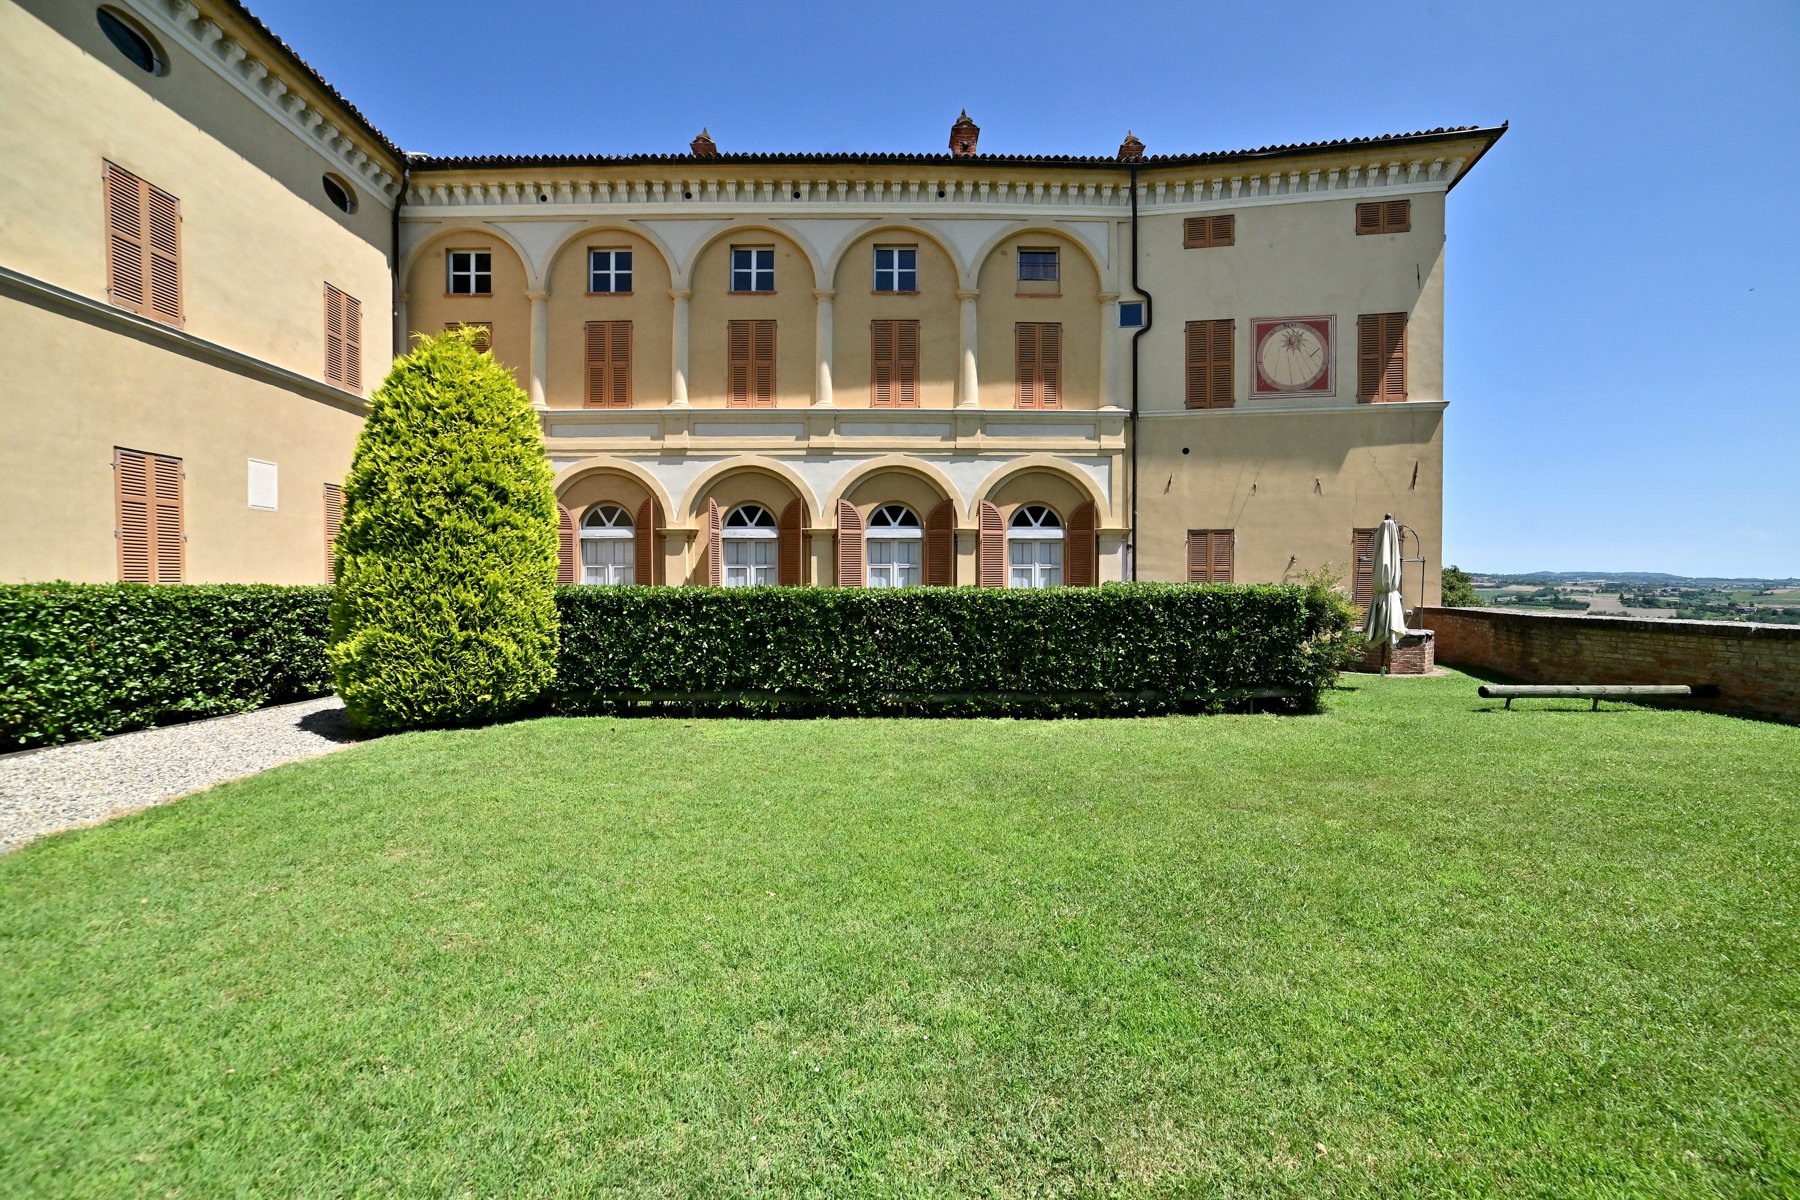 Francis York Castello di RInco Luxury Apartments in a 17th Century Castle in Piedmont, Italy 29.jpg